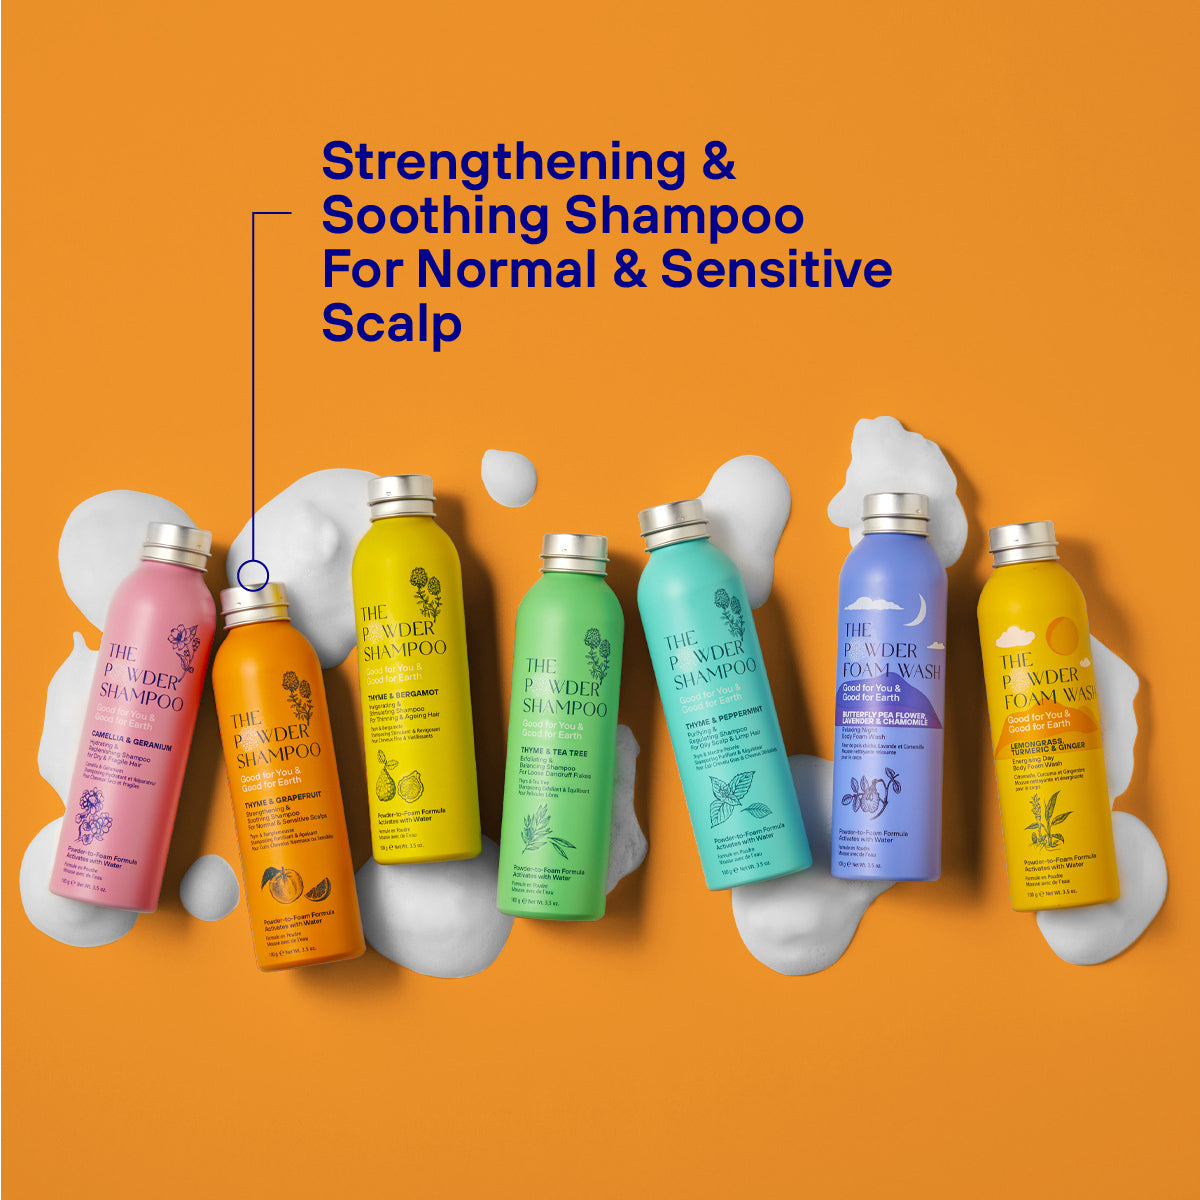 30x Mini bottle - Strengthening & Soothing Powder Shampoo For Normal & Sensitive Scalps 20g / 0.70oz